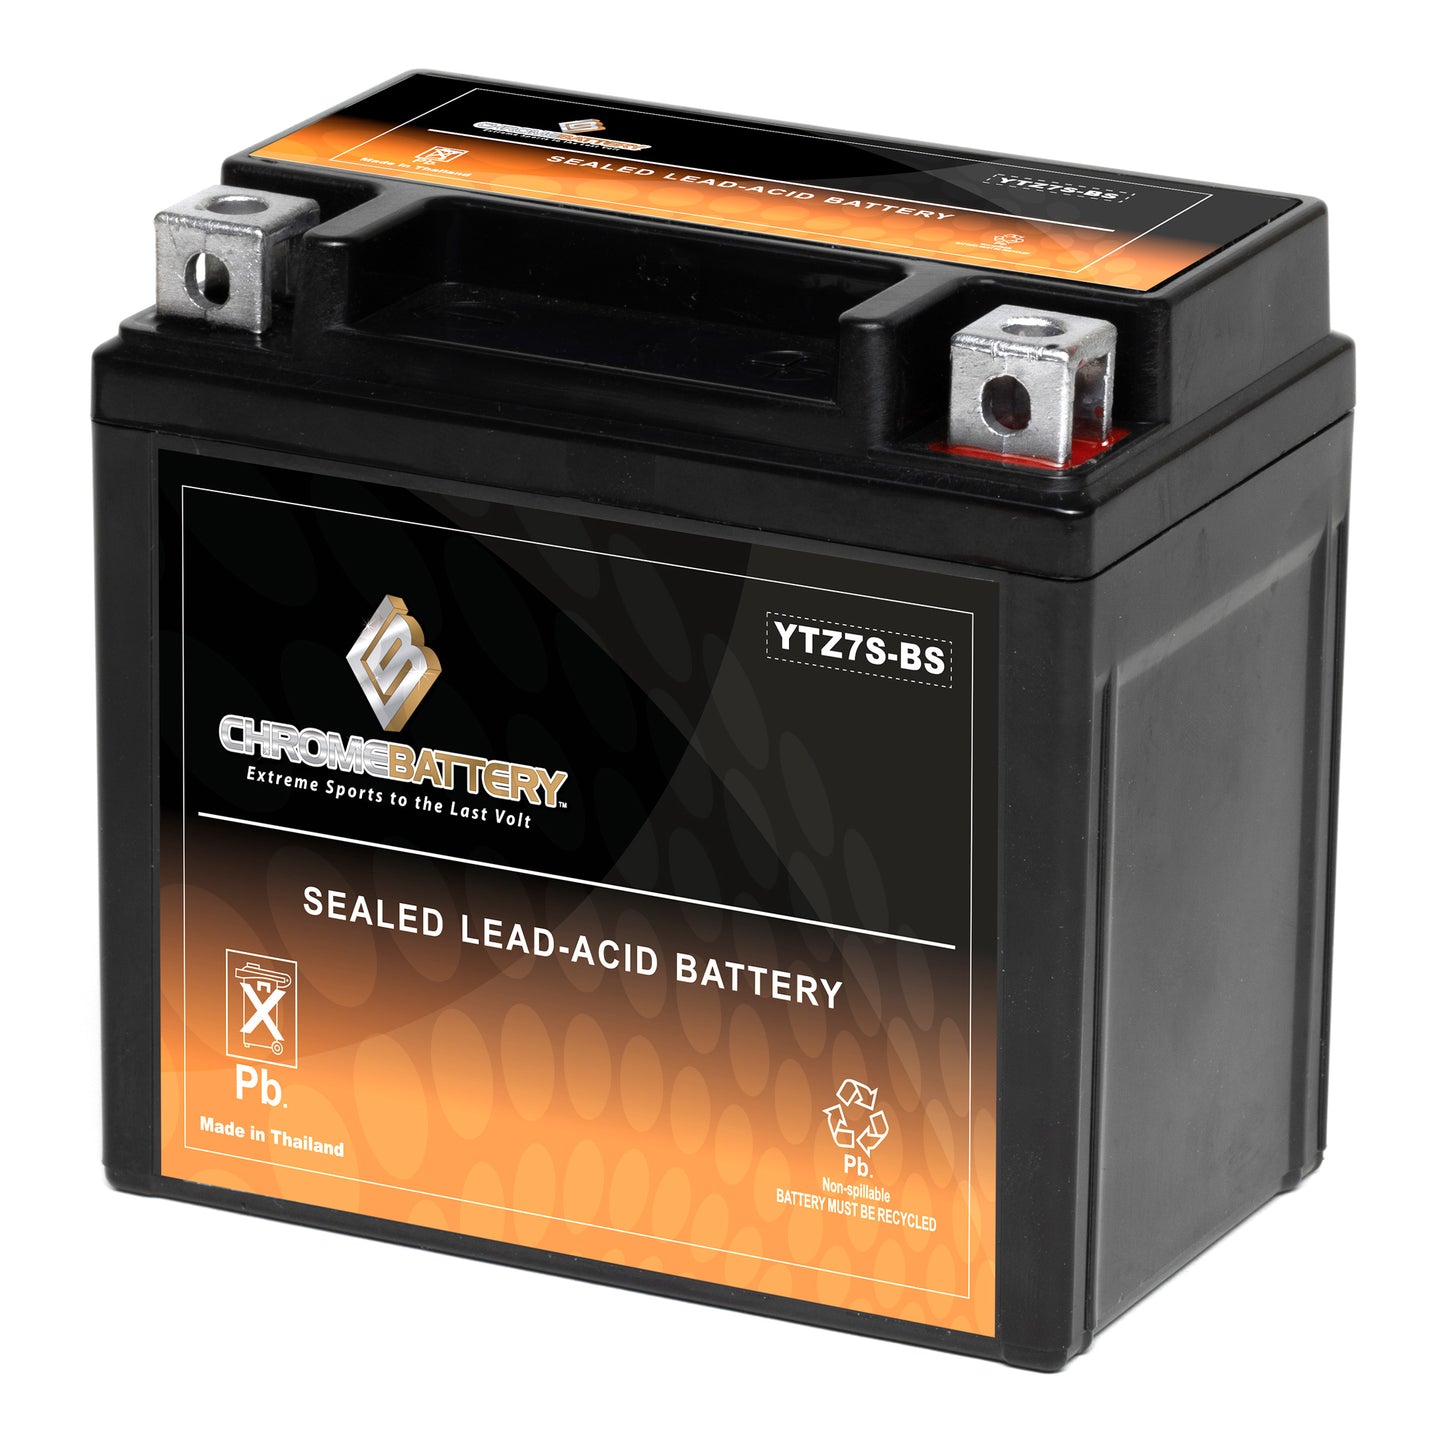 YTZ7S-BS High Performance Power Sports Battery